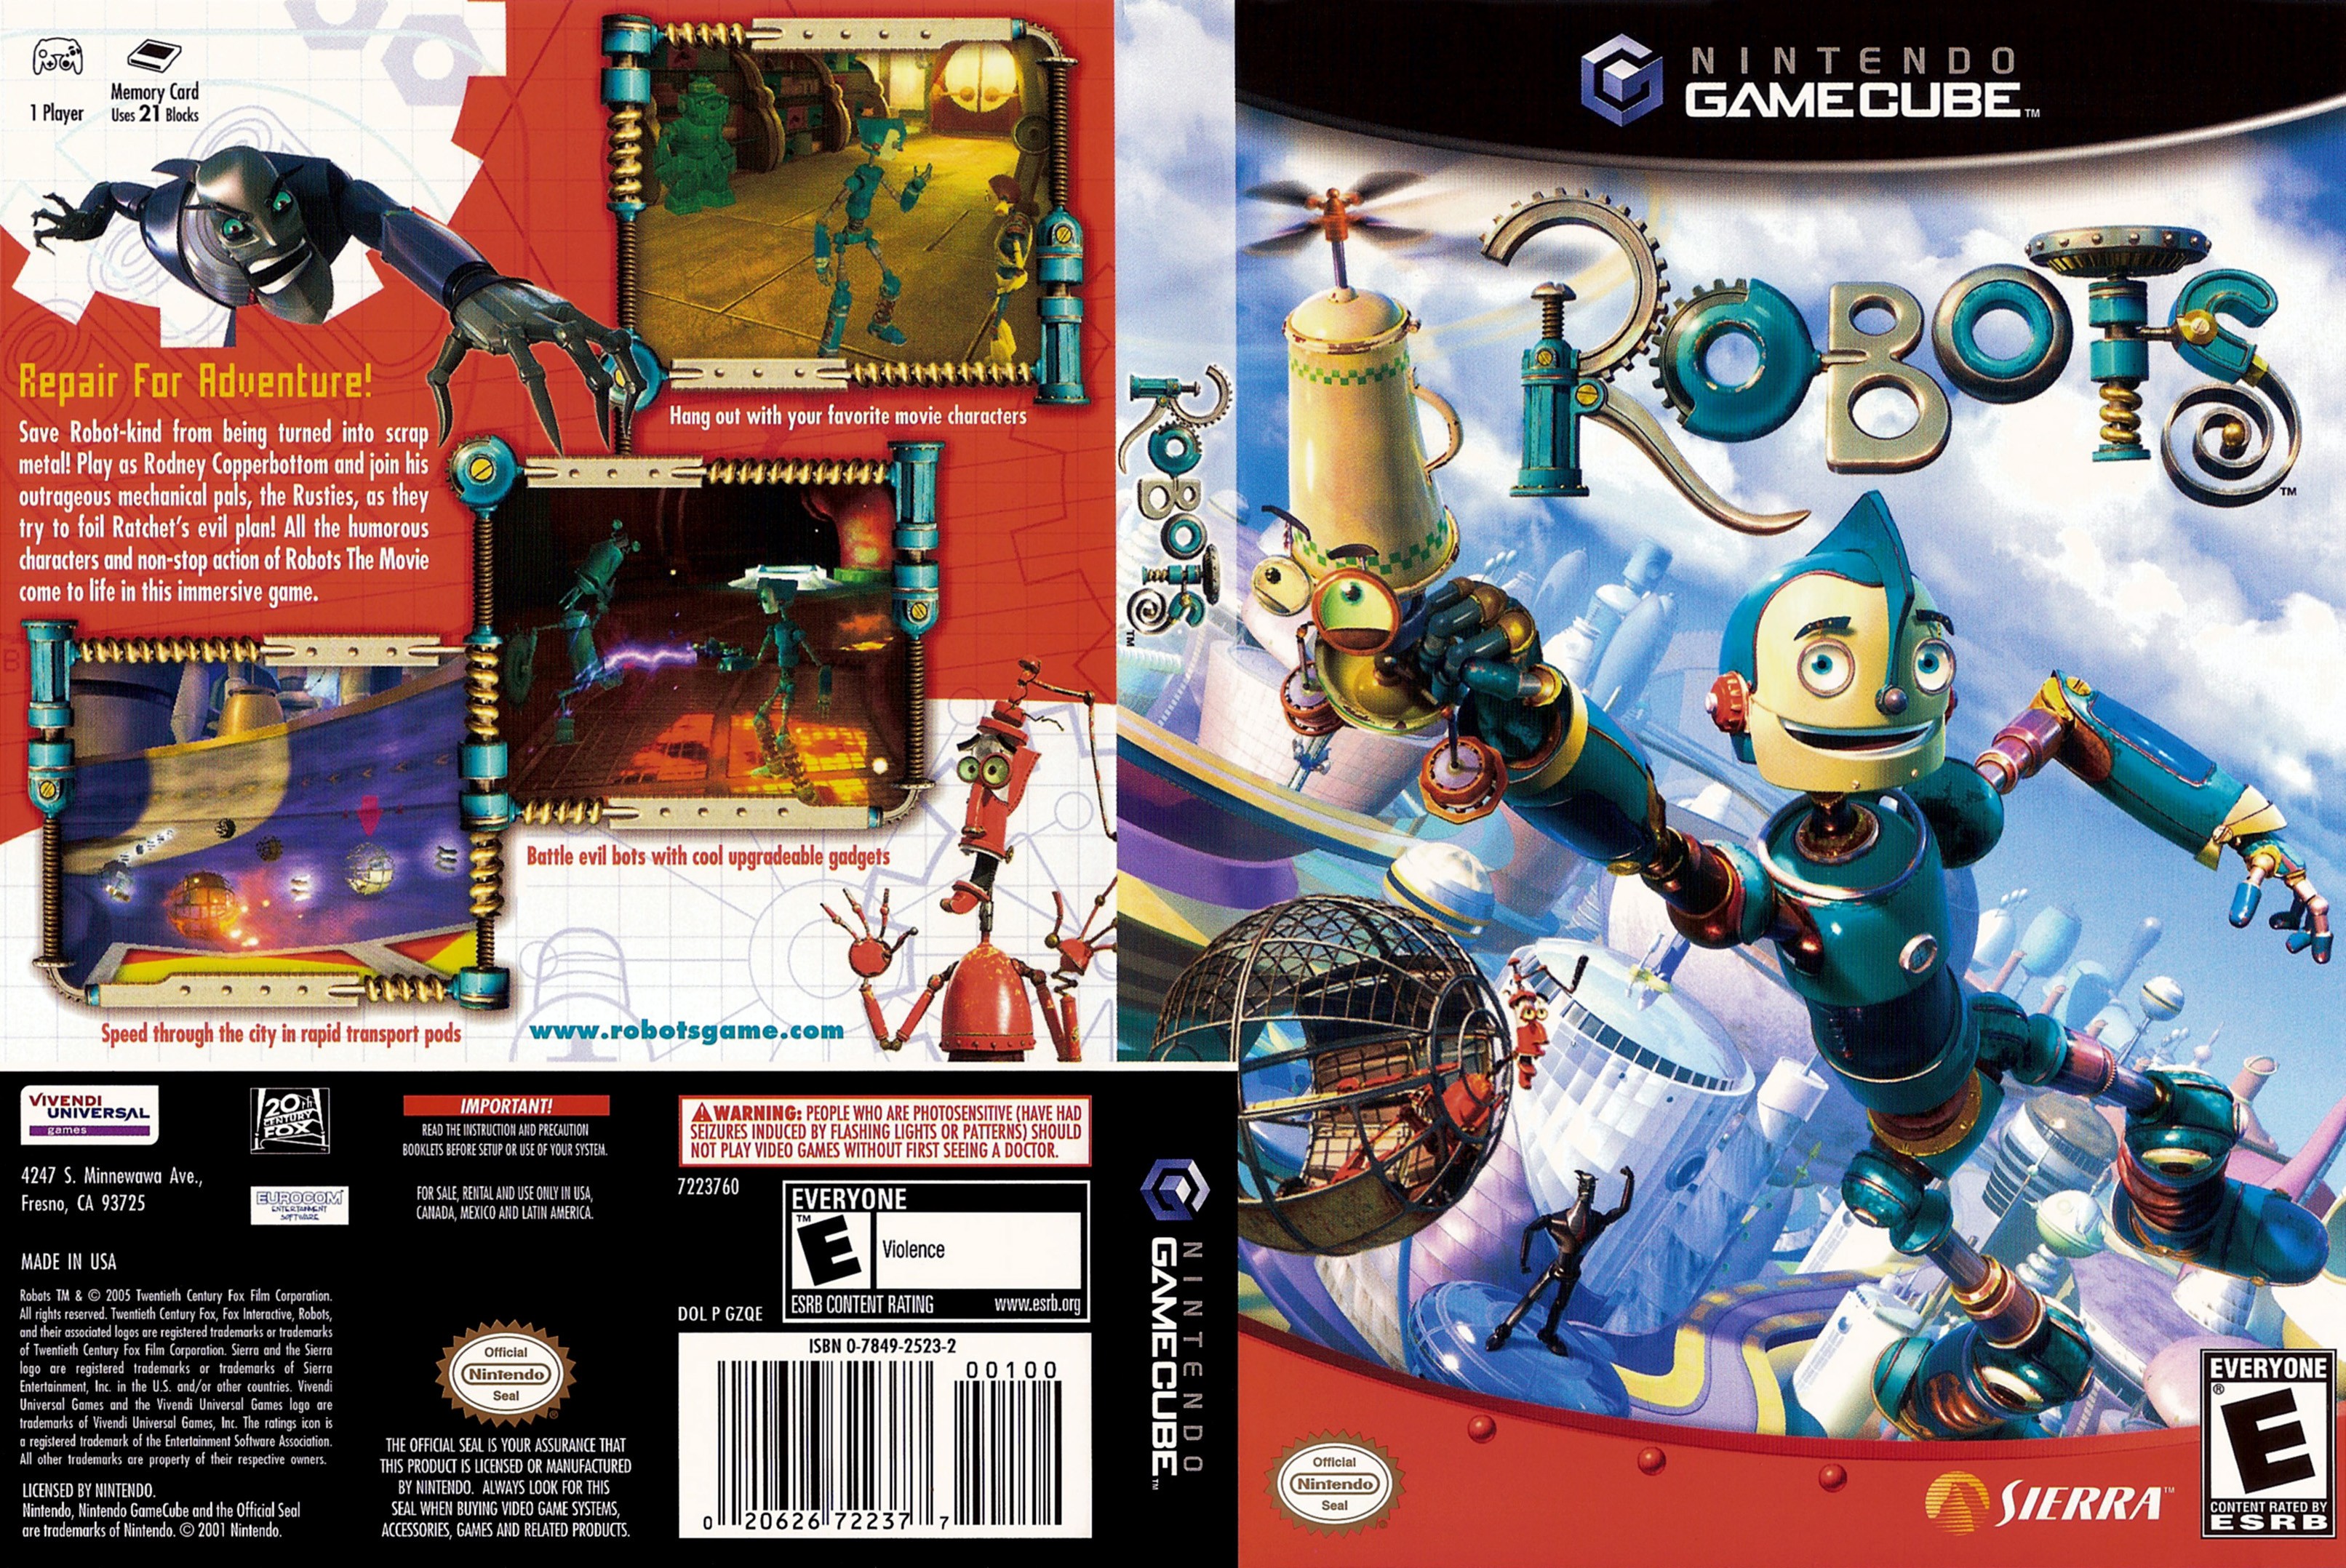 Robots 2005 Pc Game